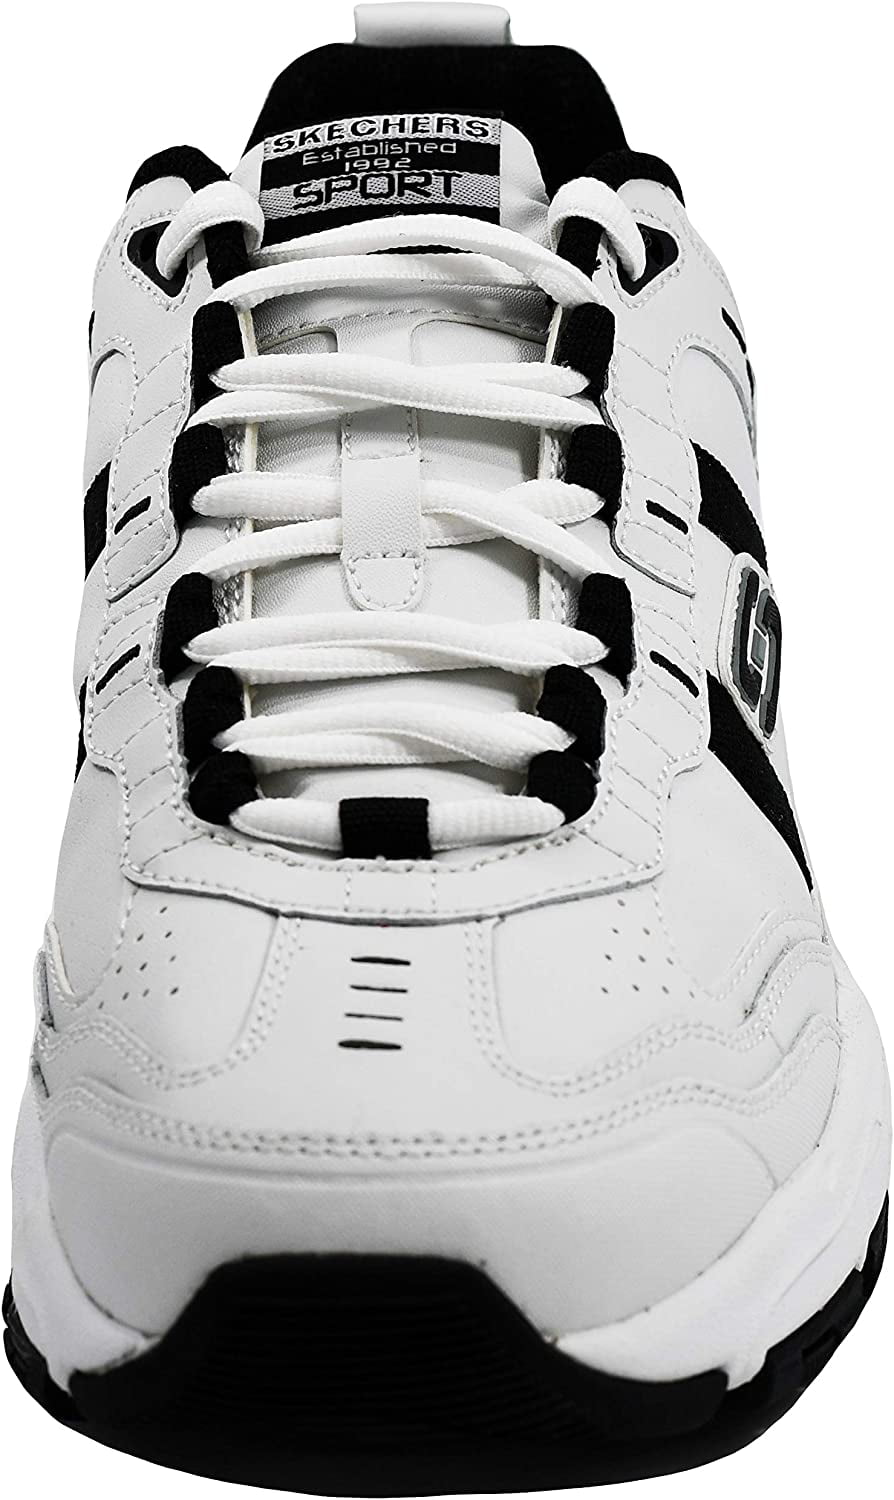 Skechers Sport Men's Vigor Serpentine Memory Sneaker, White/Black, 14 M US - Walmart.com